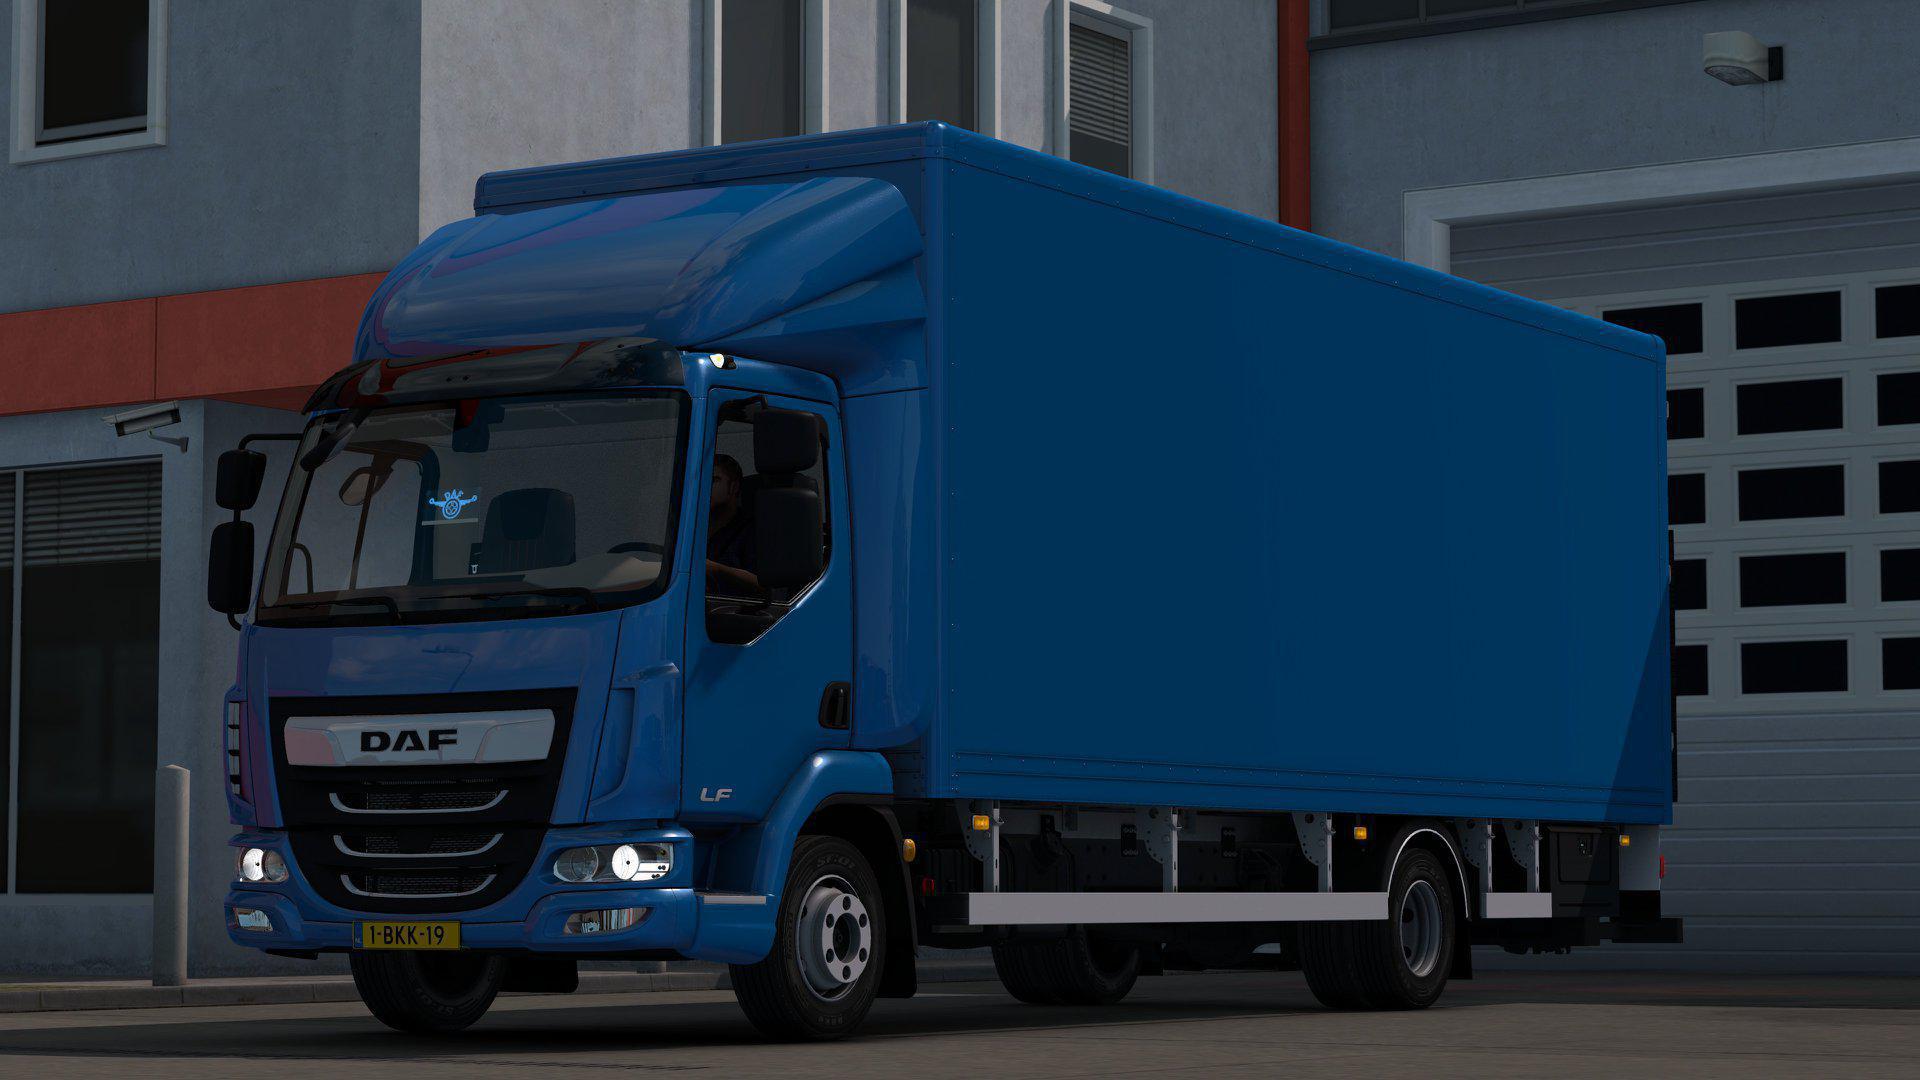 Ets2 Daf Lf Truck V10 135x Euro Truck Simulator 2 Modsclub